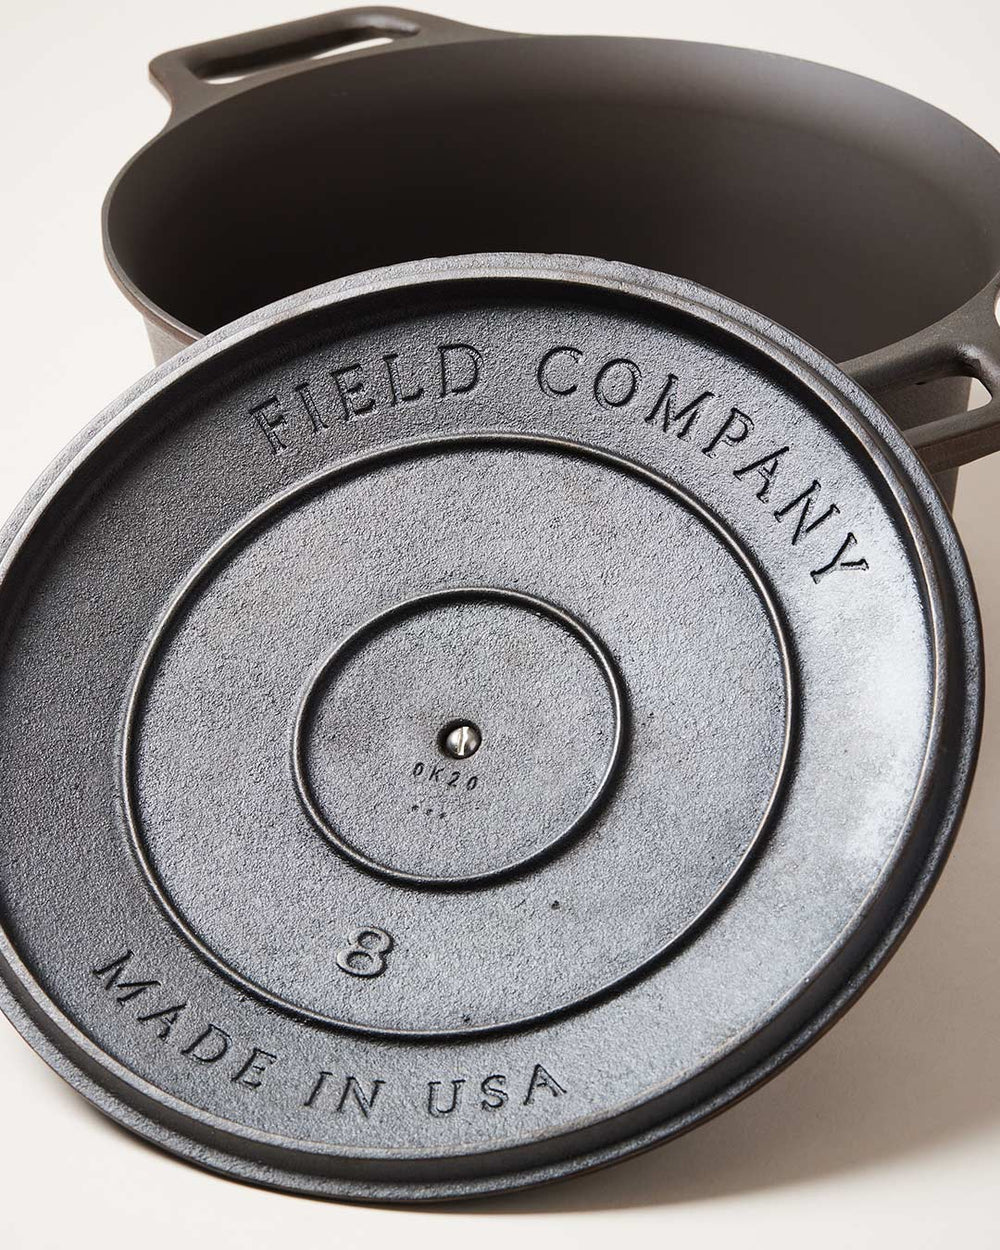 Field Company No. 8 Cast Iron Dutch Oven, 4.5 qt.